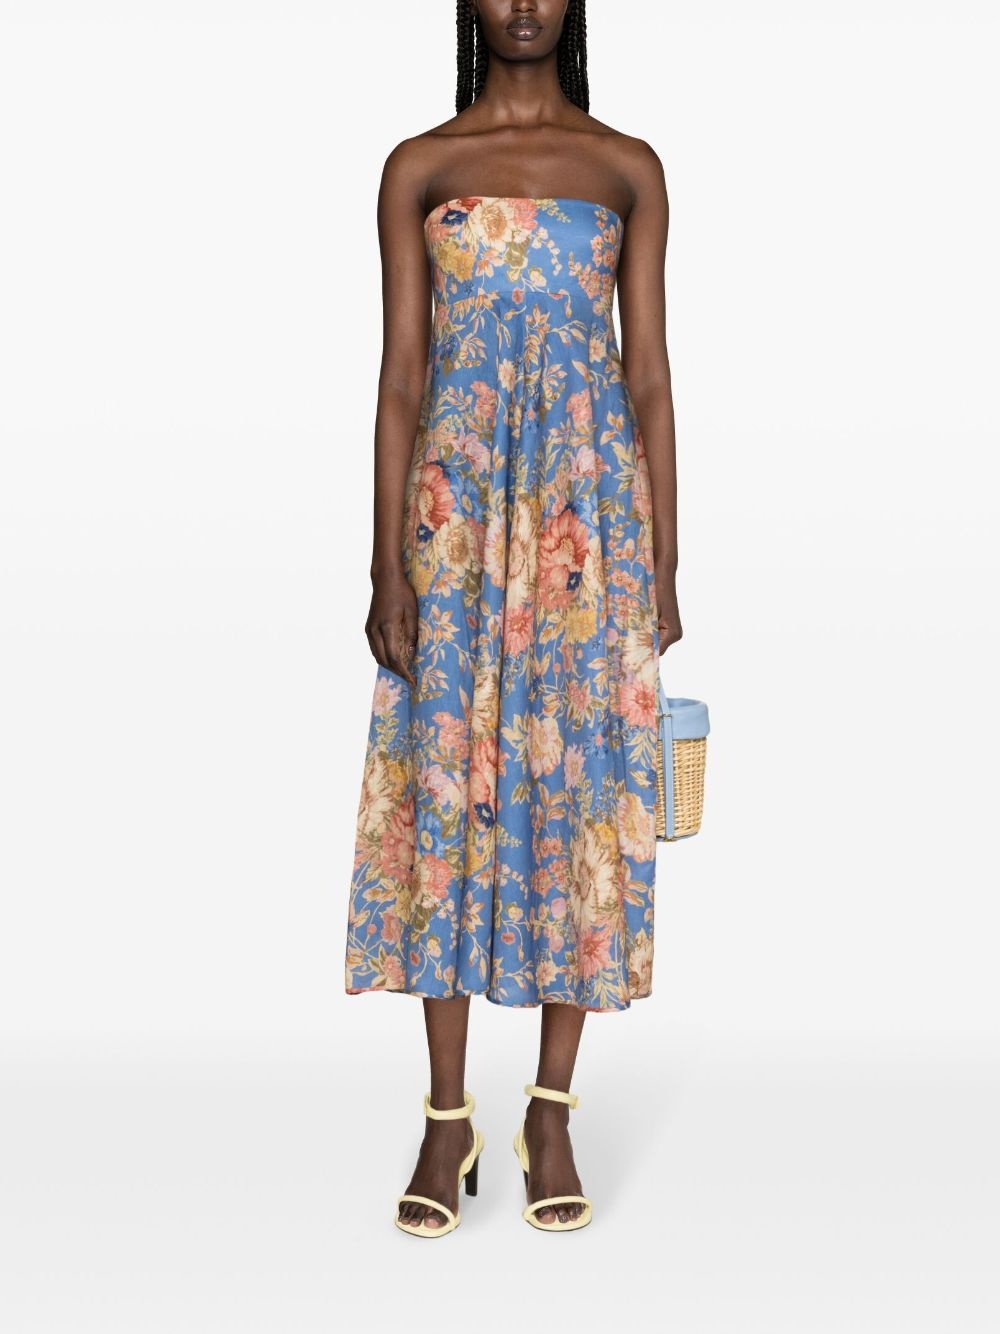 August floral-print strapless dress - 2